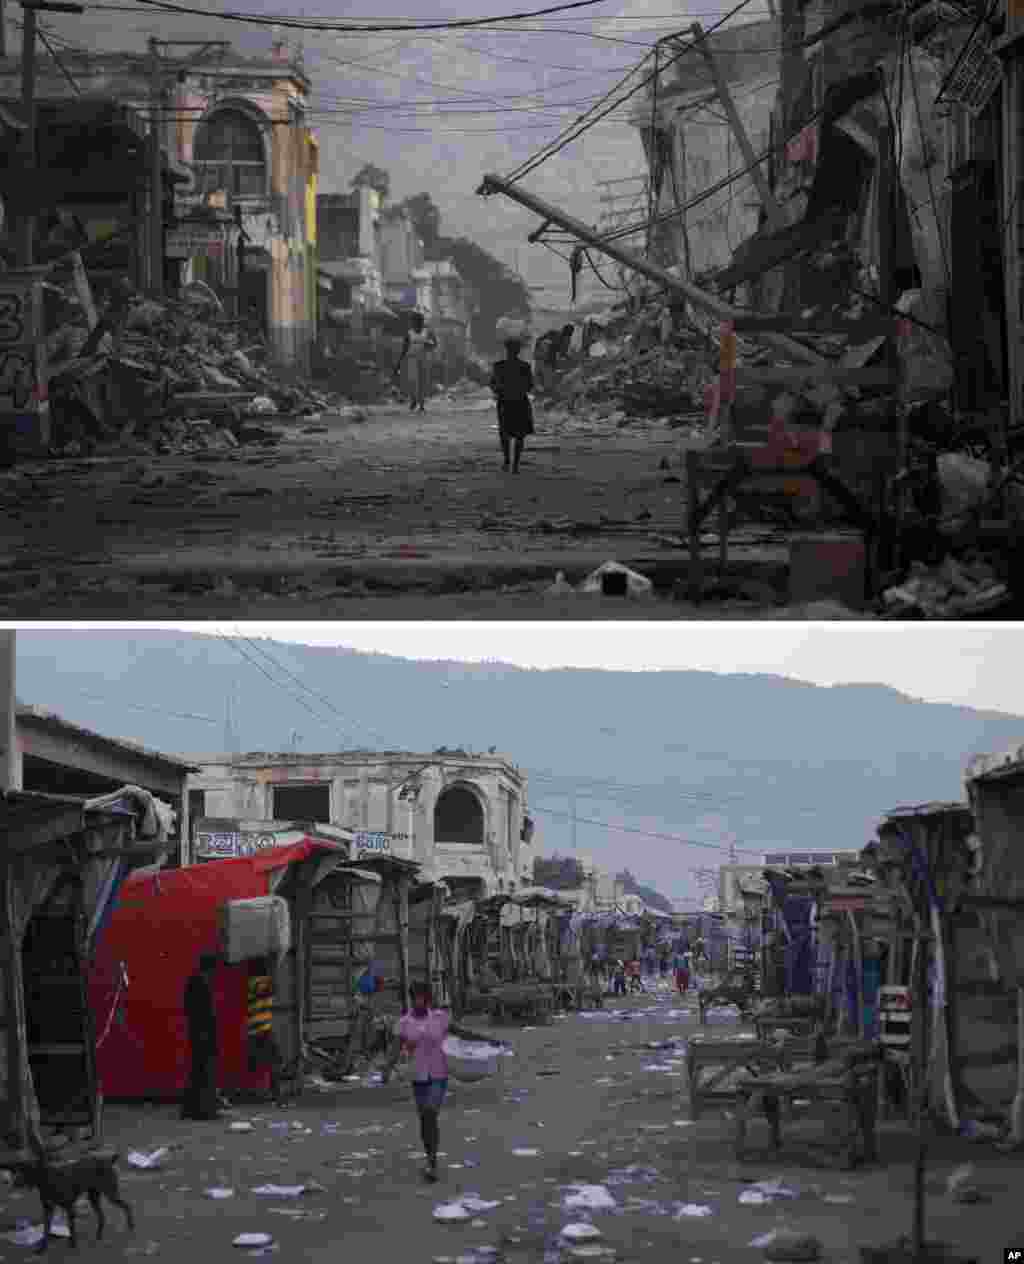 Gambar atas: &nbsp;Sebuah jalan yang hancur akibat gempa bumi yang melanda satu minggu sebelumnya di Port - au -Prince, 20 Januari 2010. Gambar bawah: Lokasi yang sama, 10 Januari 2015.